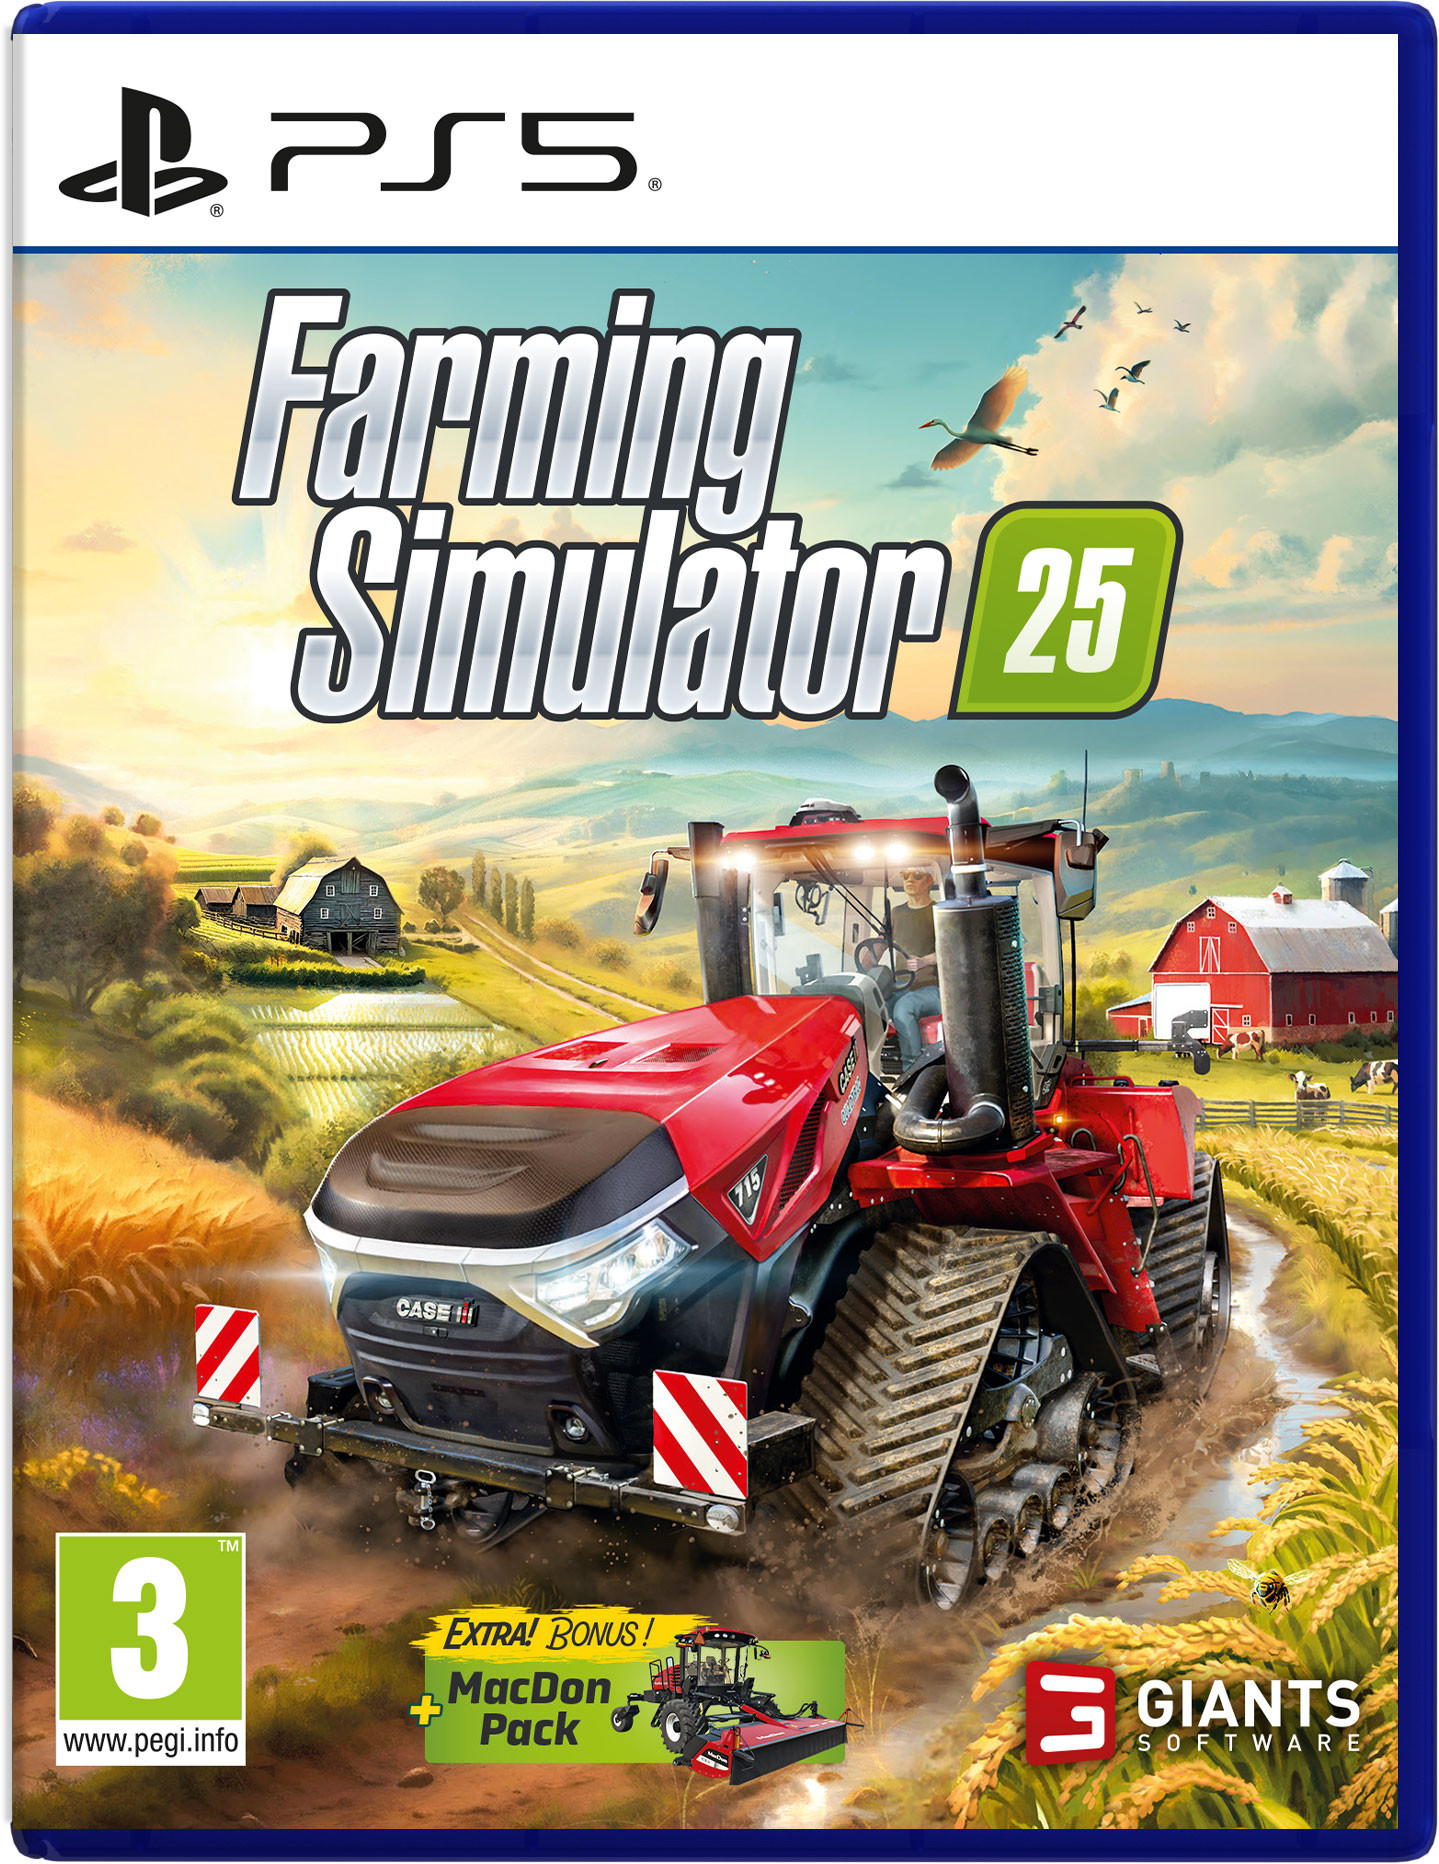 GIANTS Software GmbH Farming Simulator 25